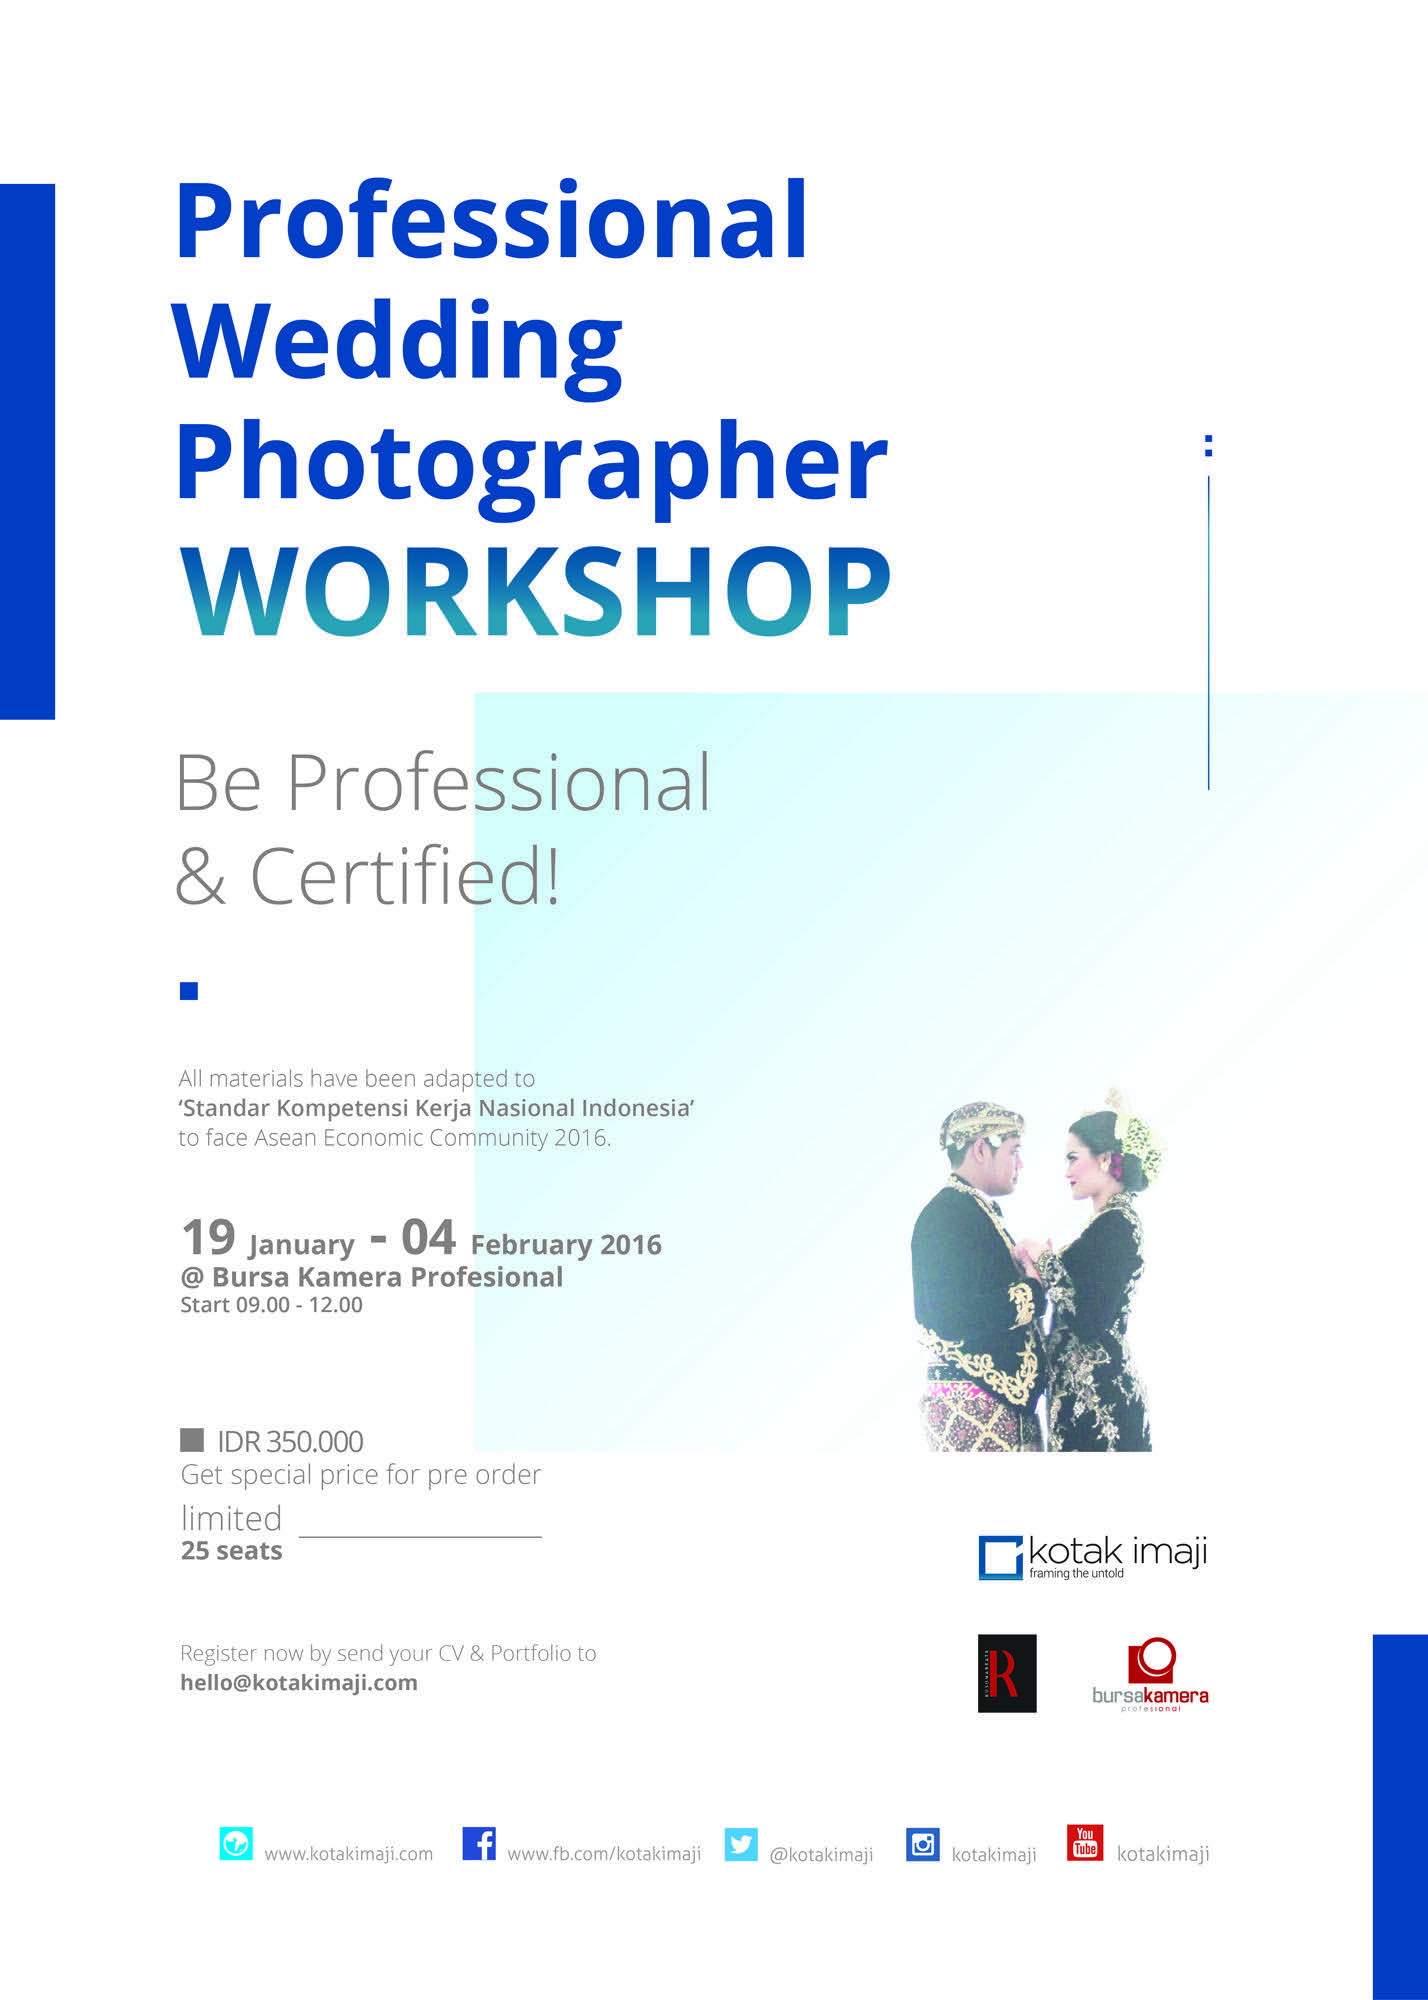 Professional Wedding Photographer Workshop 2016